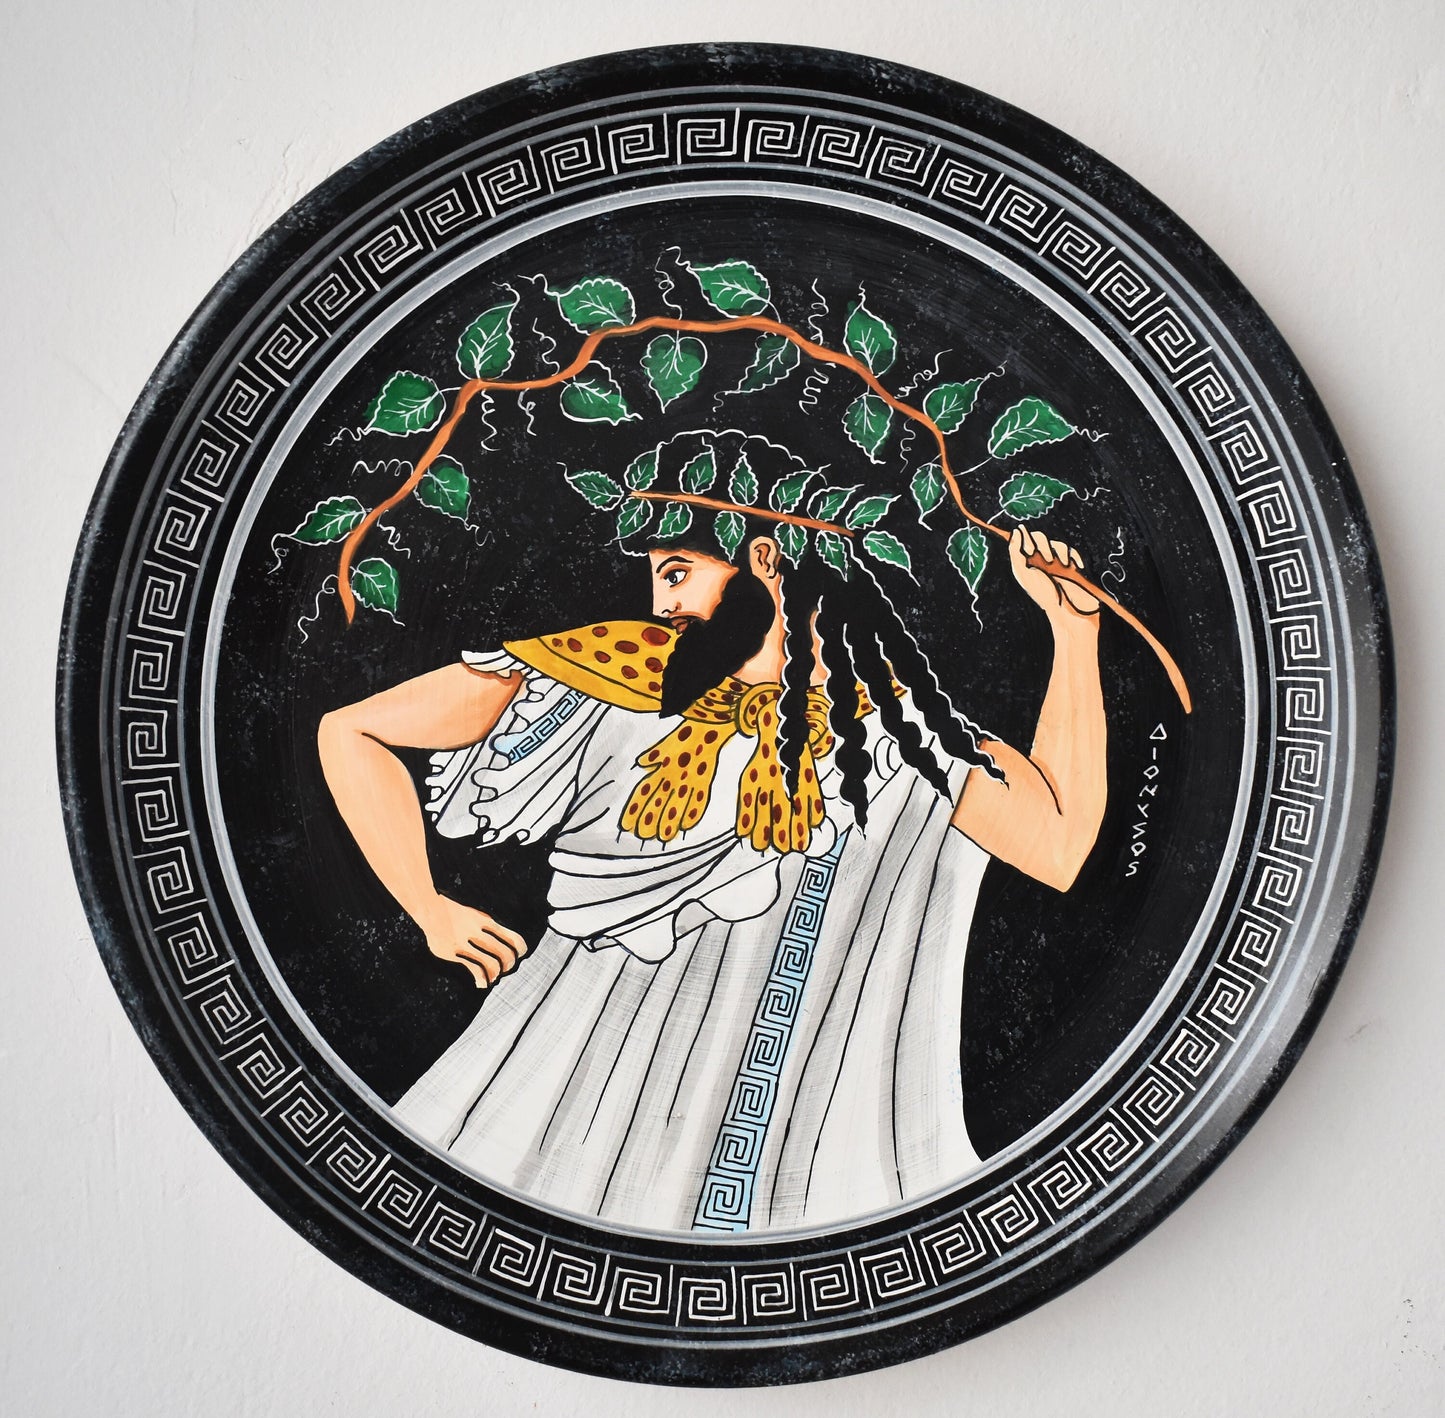 Dionysus Bacchus - Greek Roman God of wine, ecstasy, fertility, theatre - Ceramic plate - Meander design - Handmade in Greece